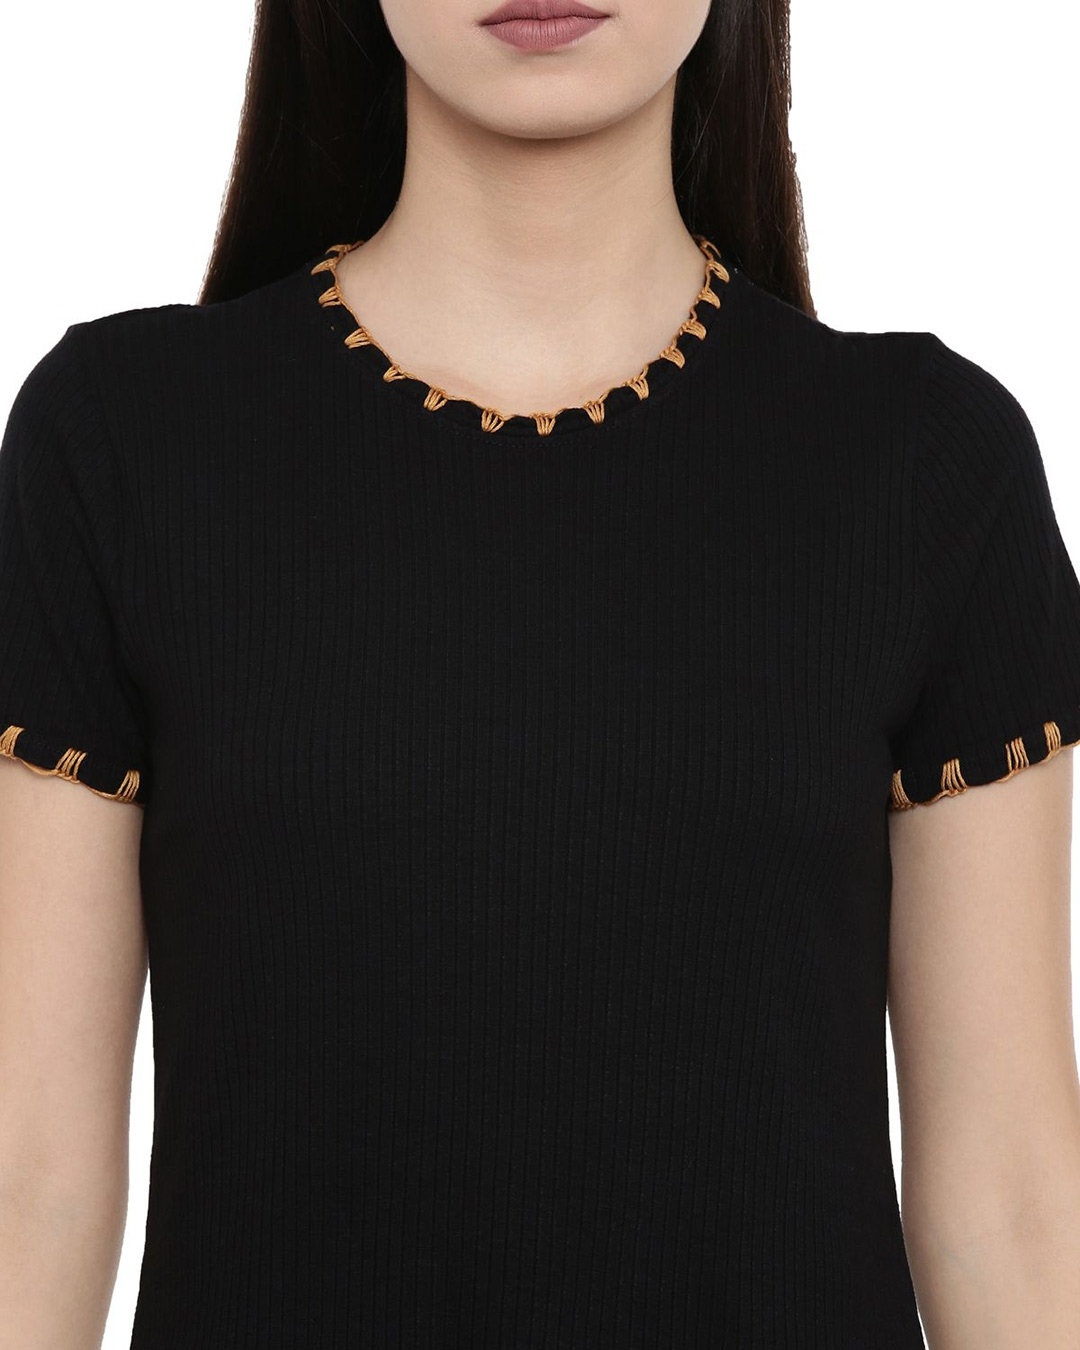 Shop Women's Black Abstract Half Sleeve Top